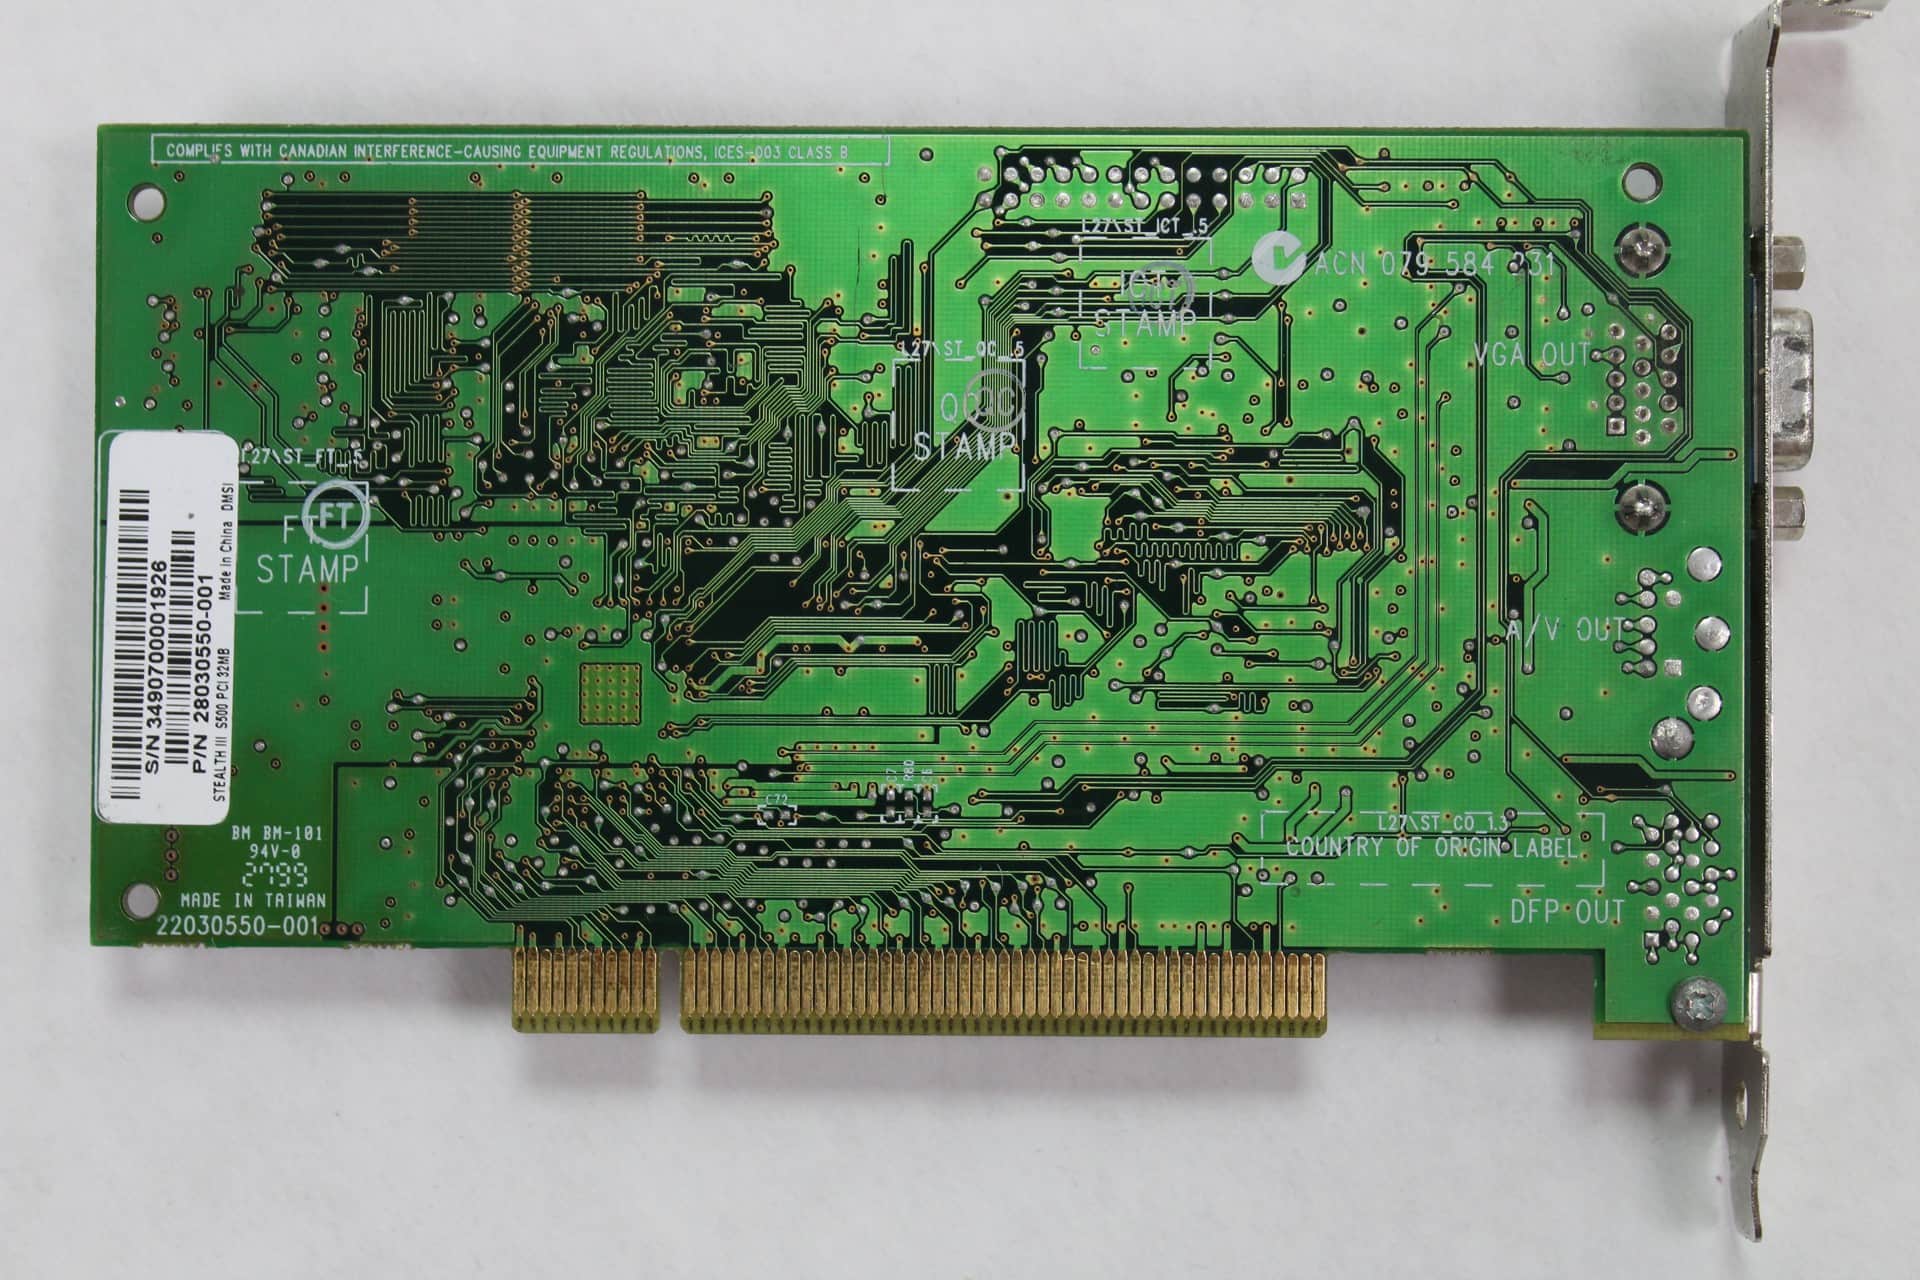 Daimond Stealth III S540 PCI